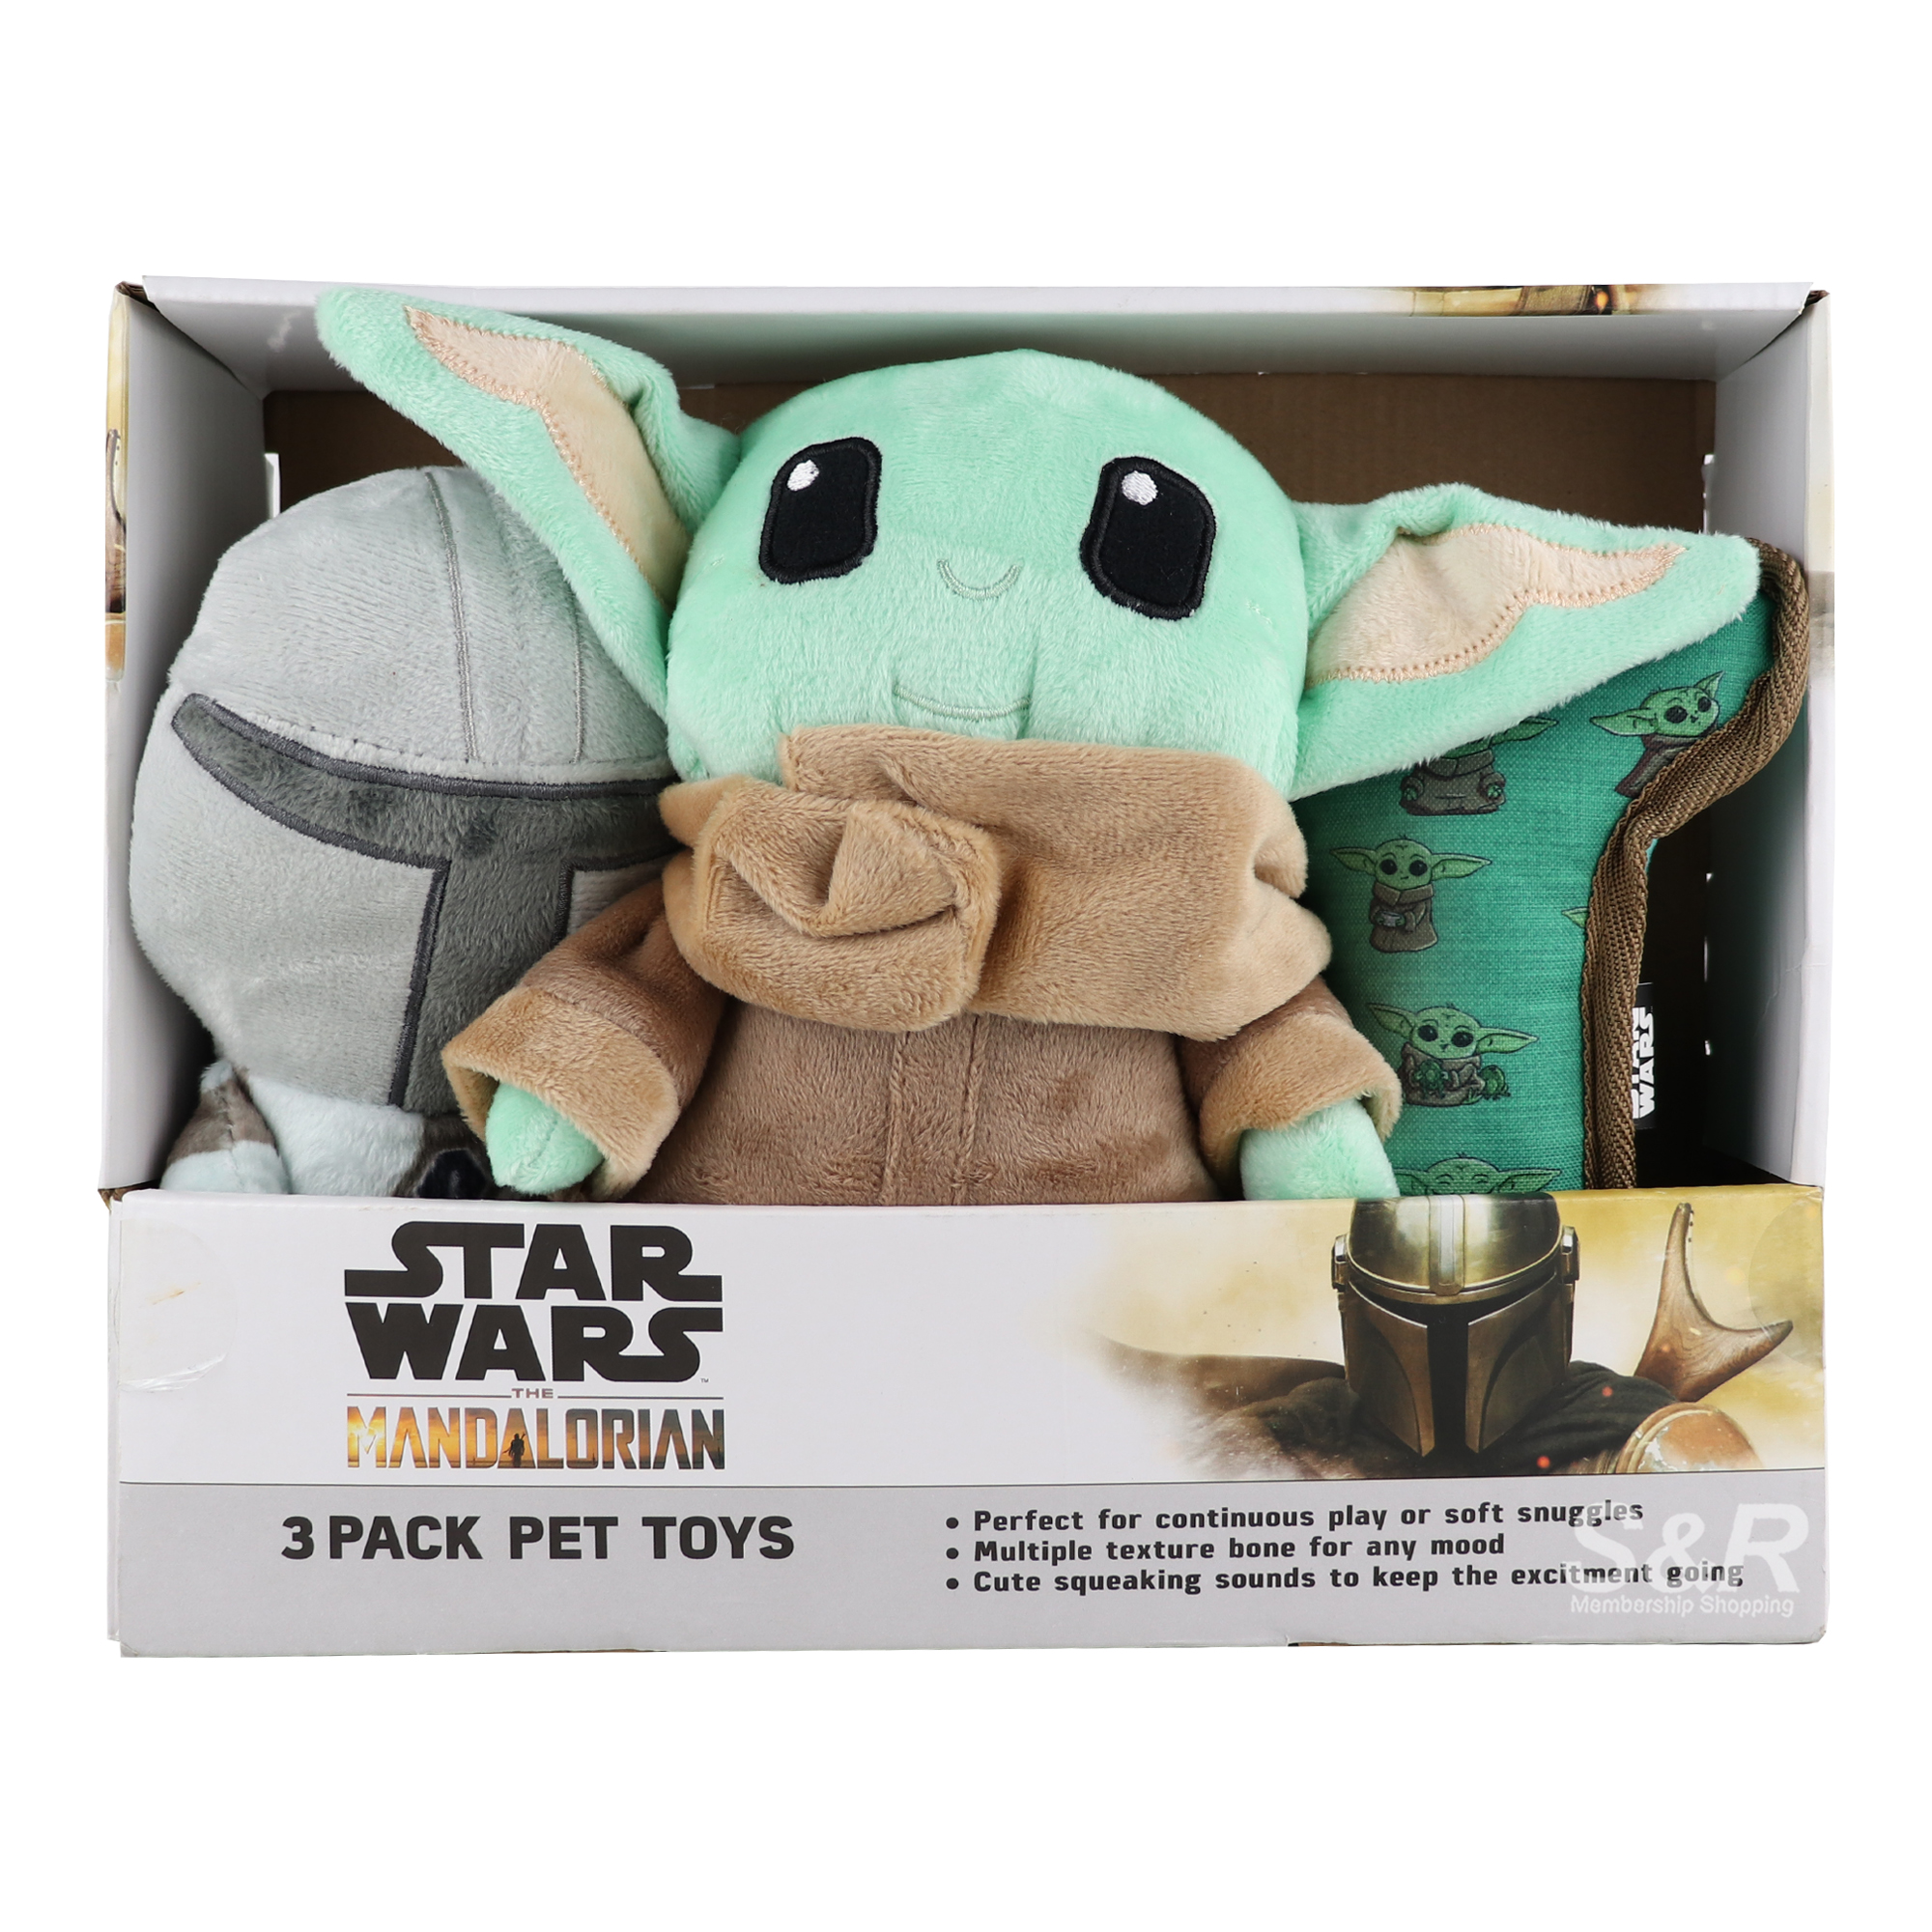 Star Wars Mandalorian 3 Pack Pet Toys